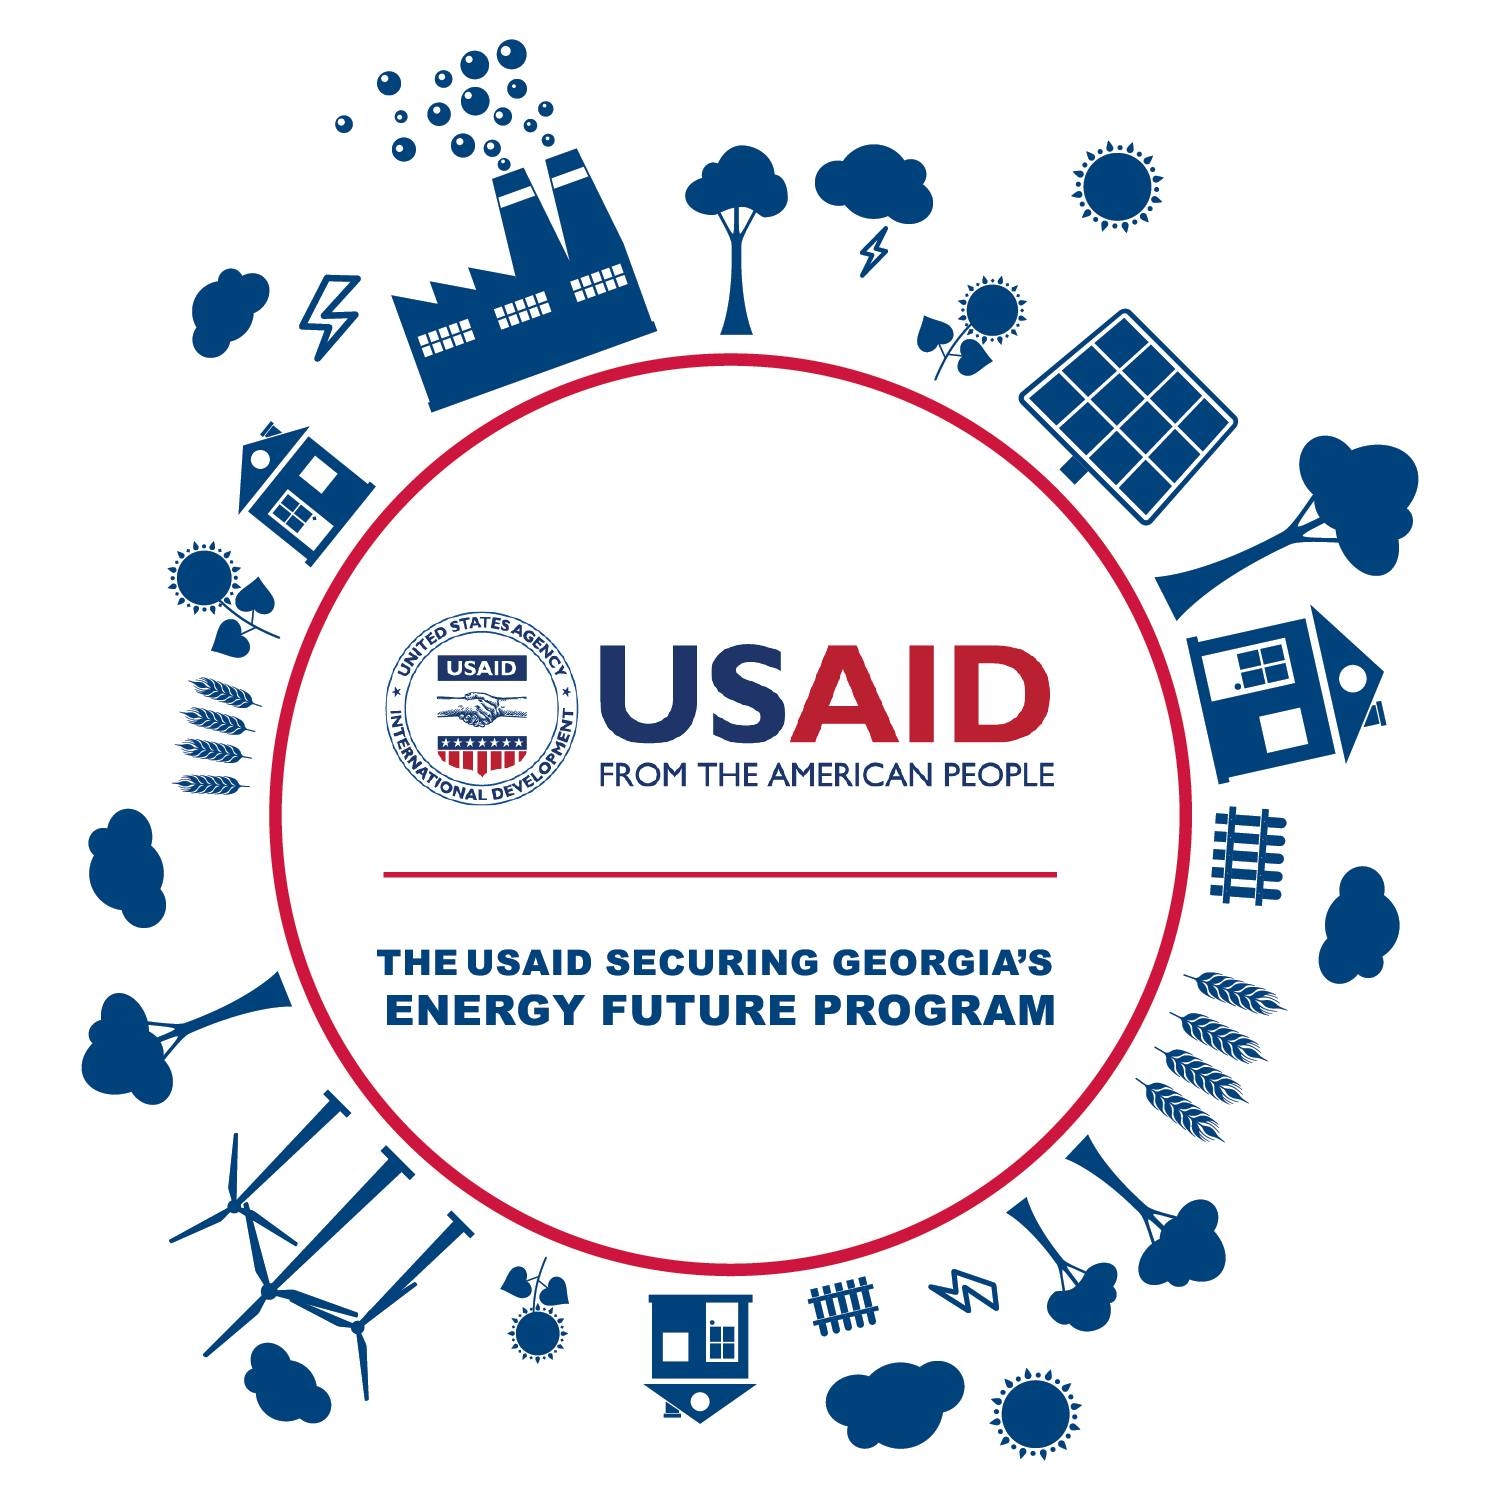 Securing Georgia’s Energy Future Program (USAID)